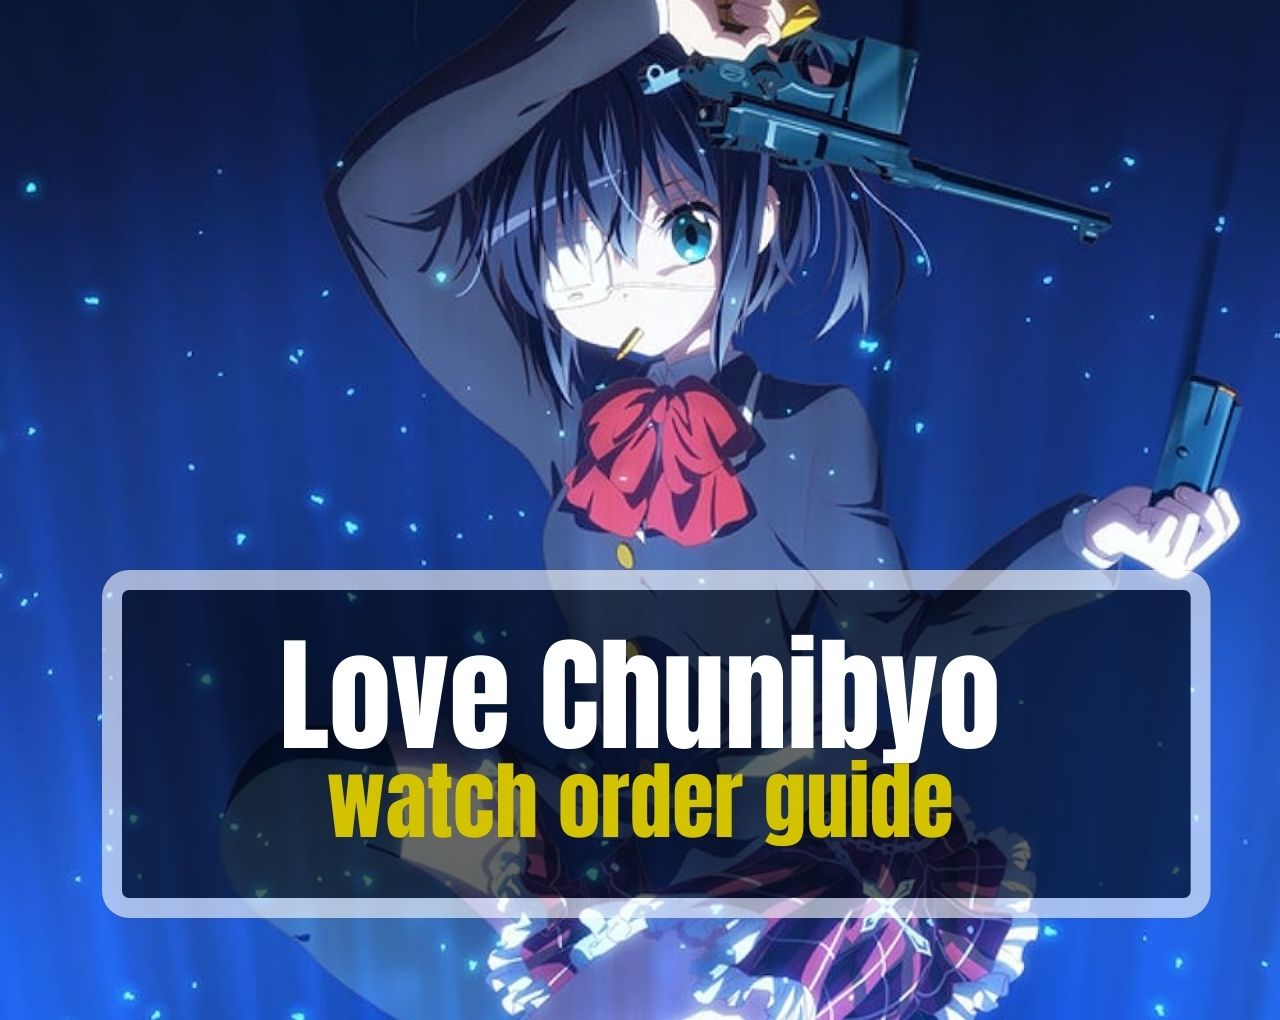 Love, Chunibyo watch order guide